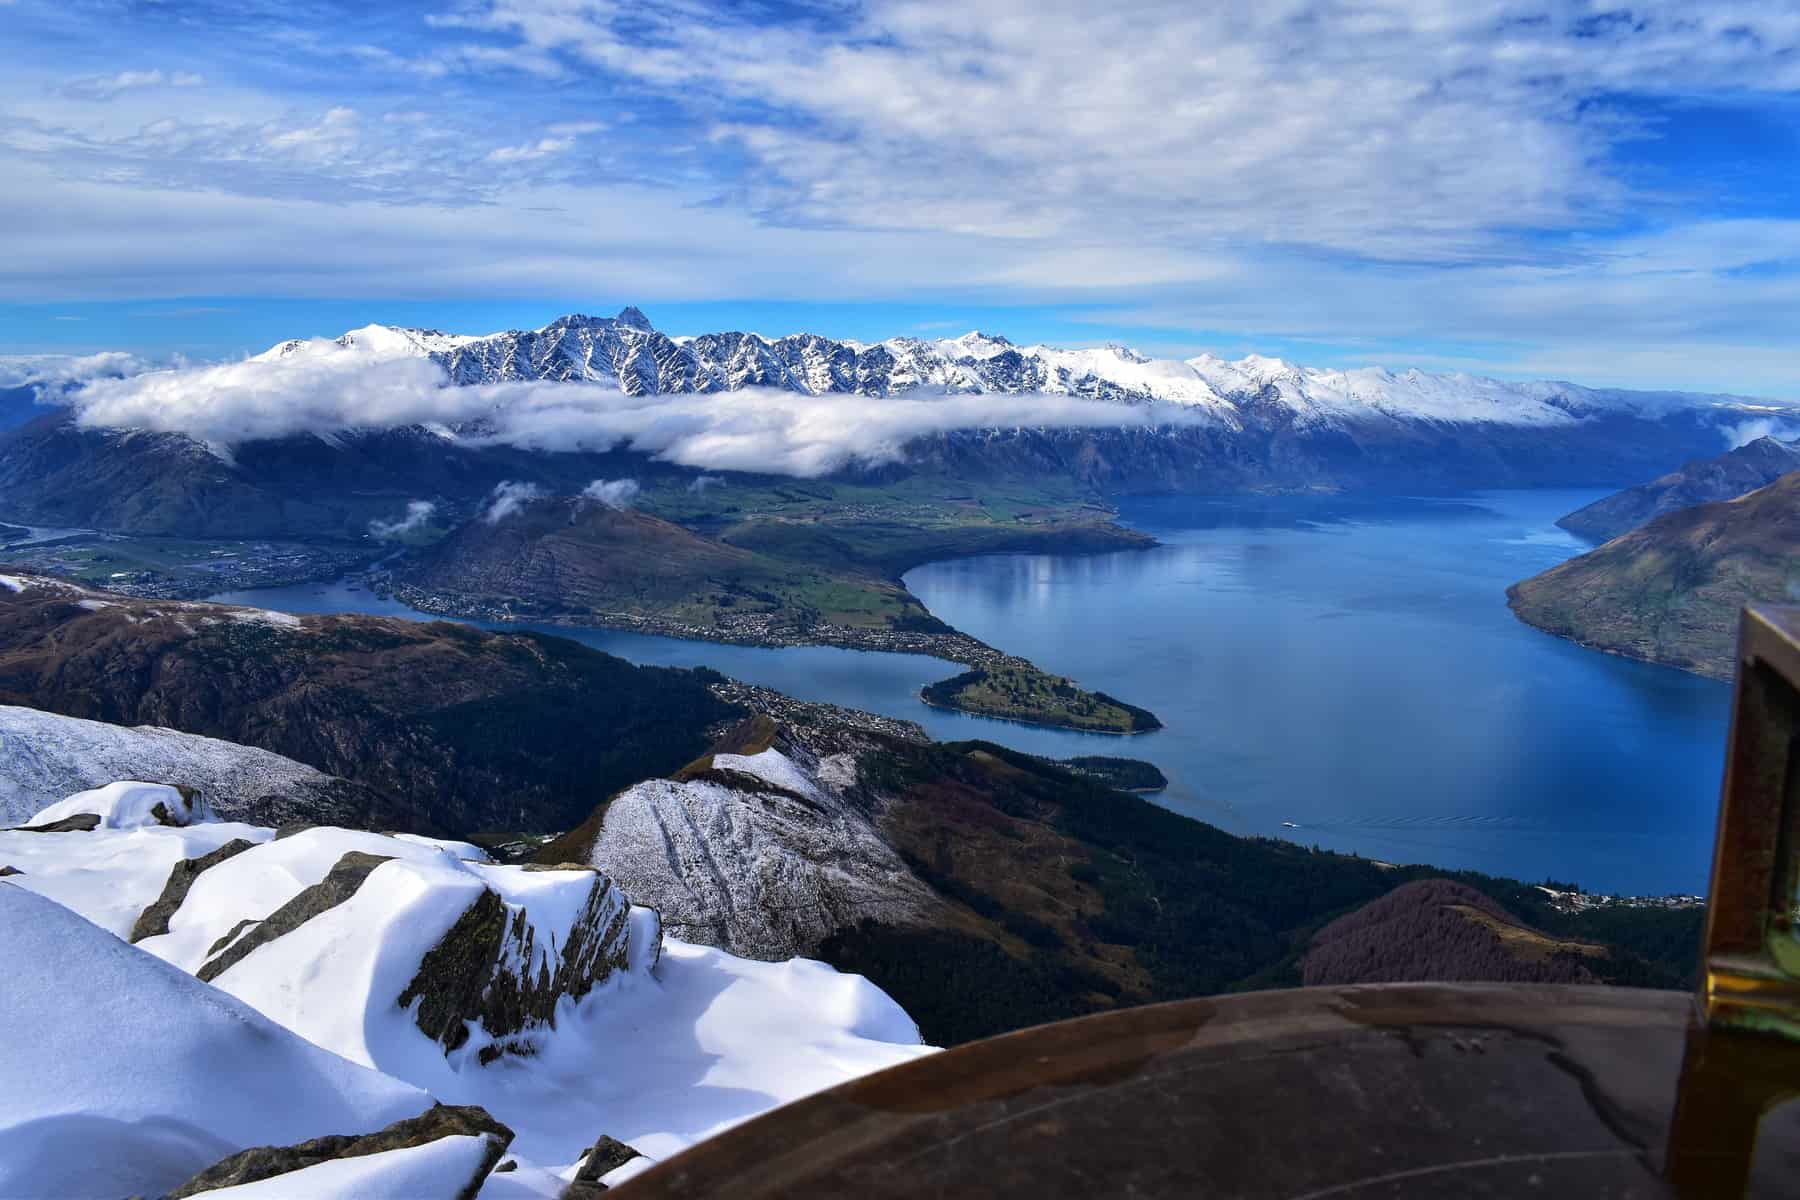 Winter vistas from the summit